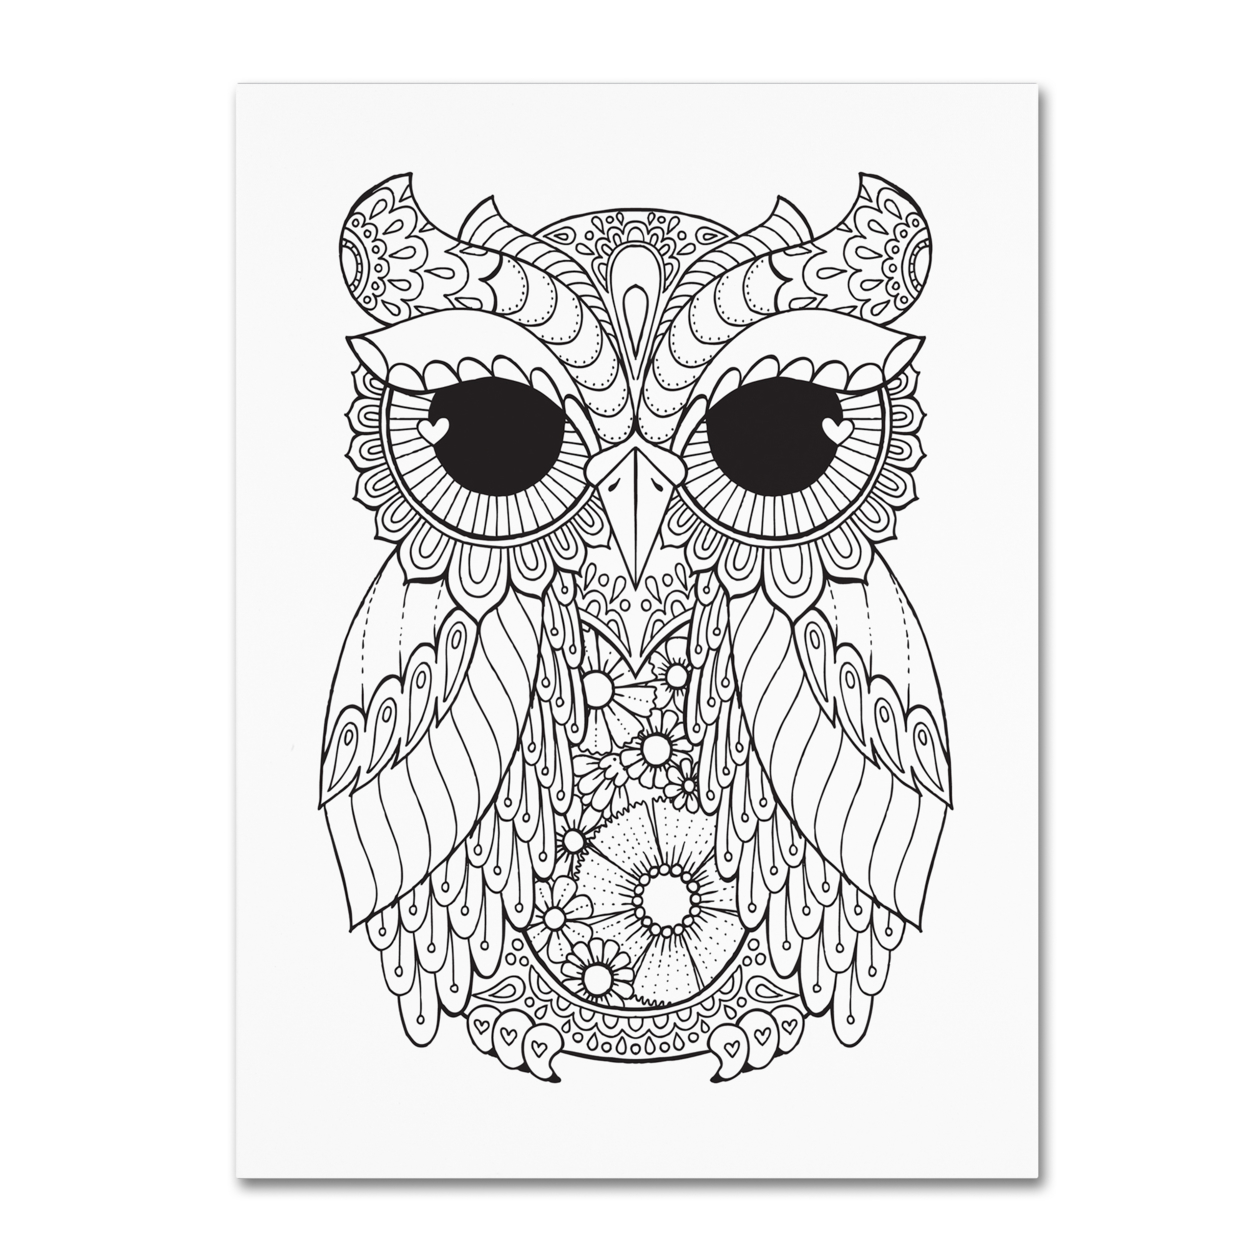 Hello Angel 'Owl 3' Canvas Wall Art 35 X 47 Inches